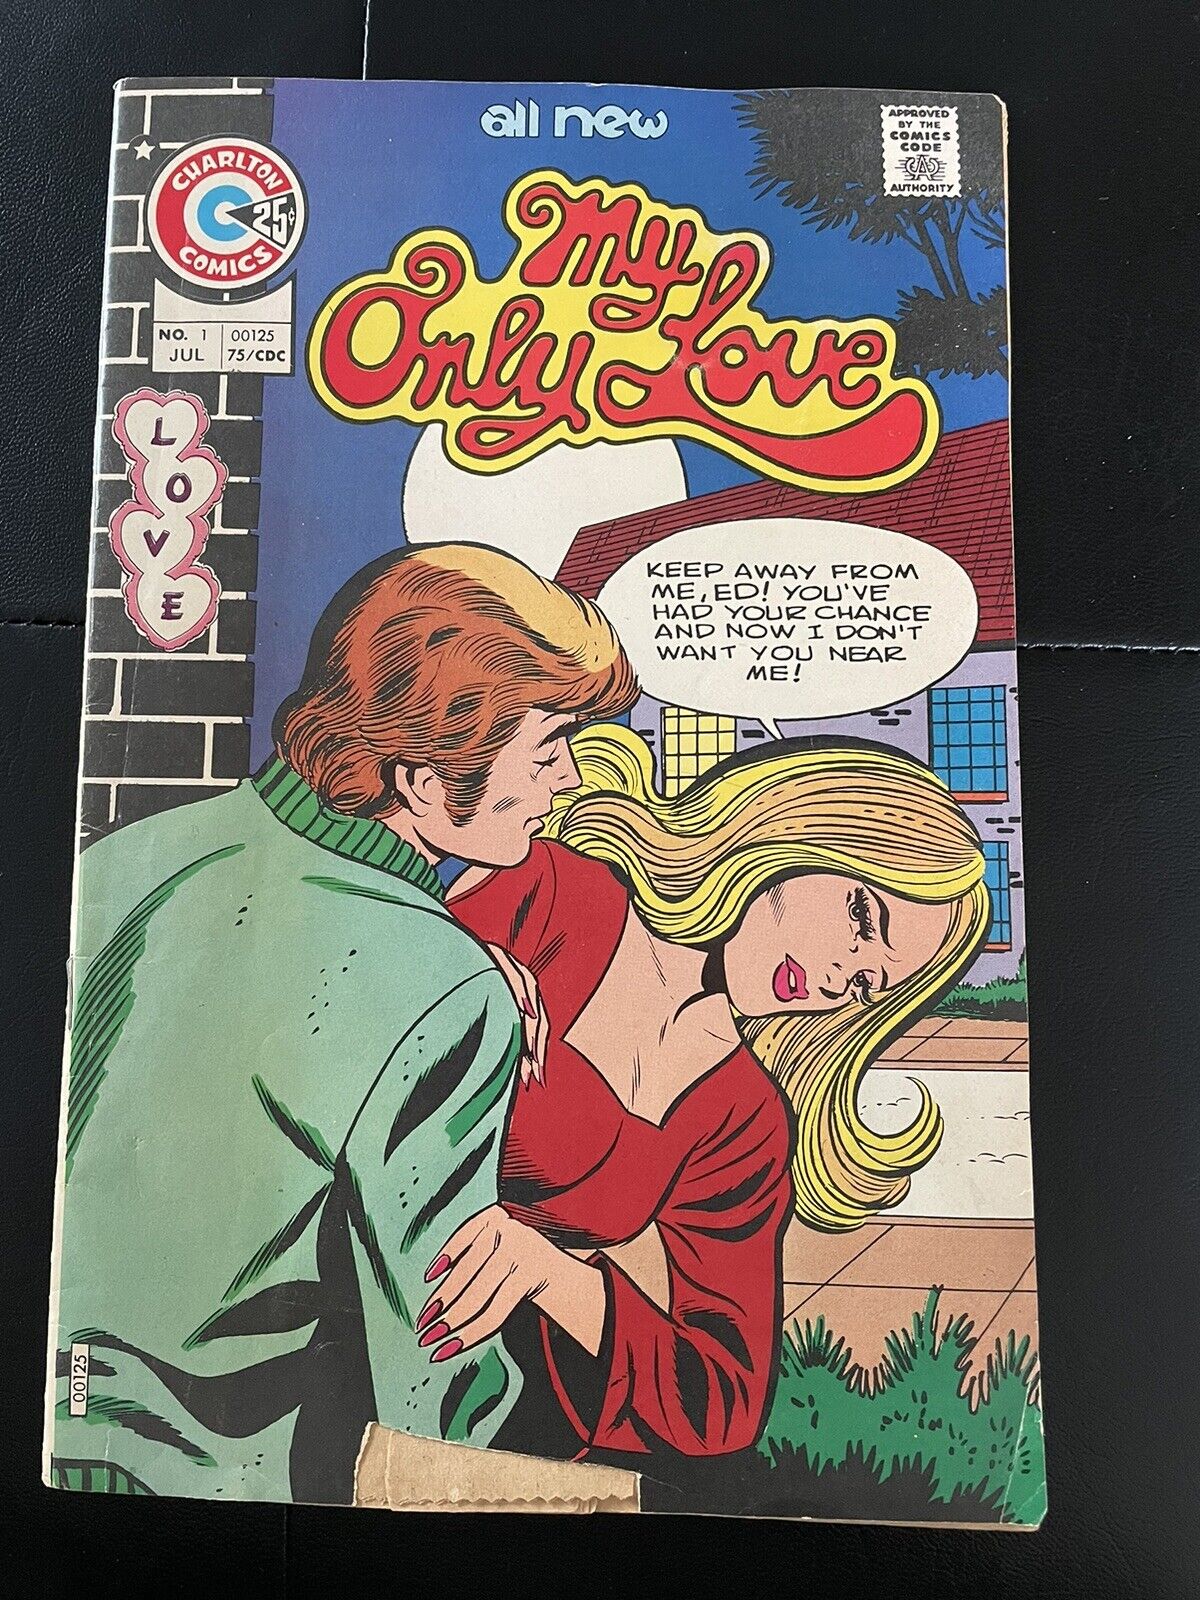 My Only Love #1 - Charlton Comics Bronze Age Romance GGA Good Girl Art - 1975